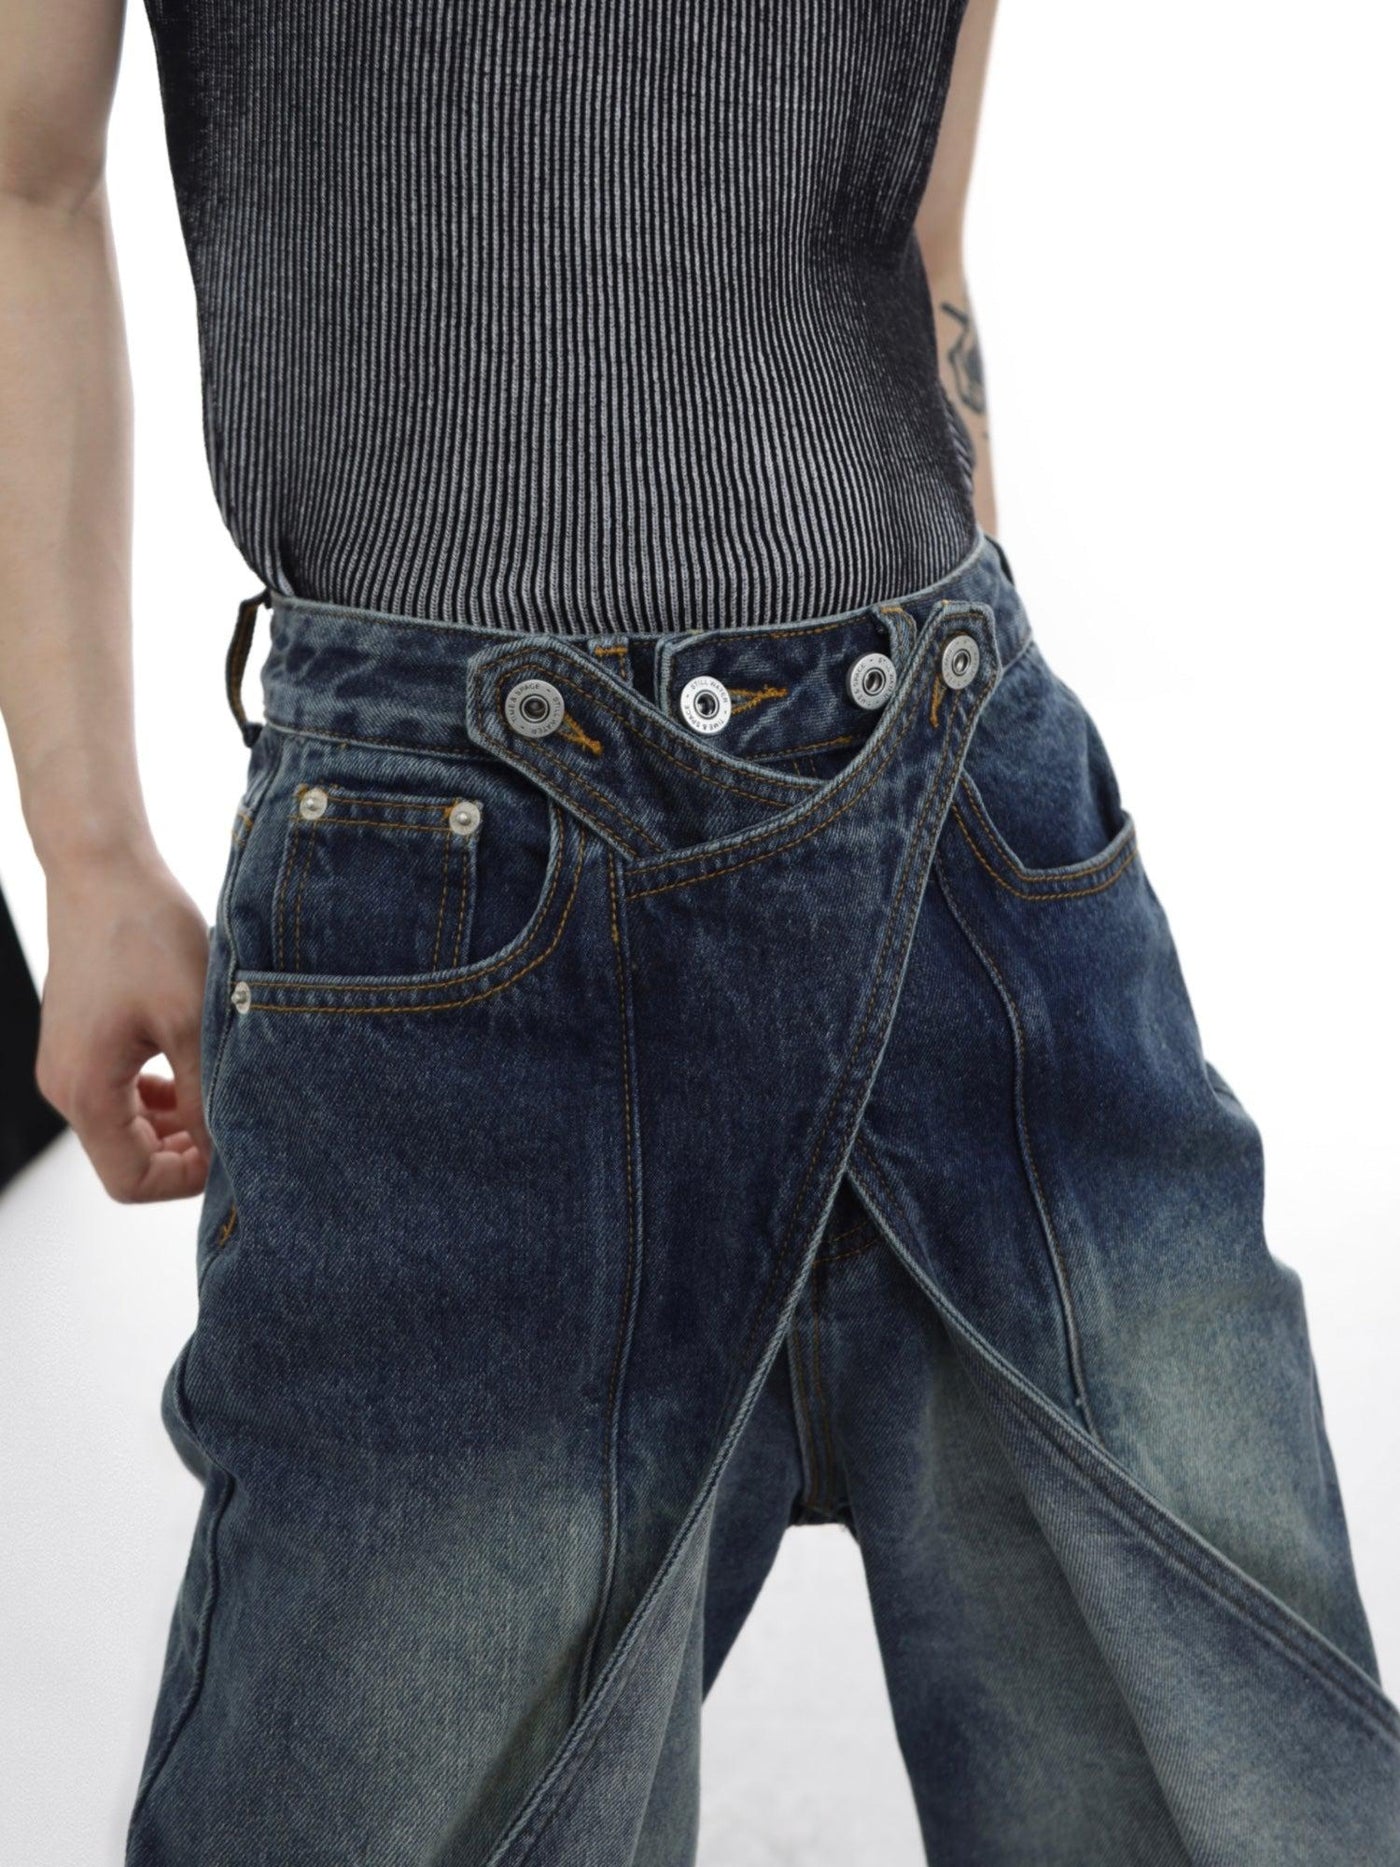 Argue Culture Washed Irregular Cut Buttoned Jeans Korean Street Fashion Jeans By Argue Culture Shop Online at OH Vault